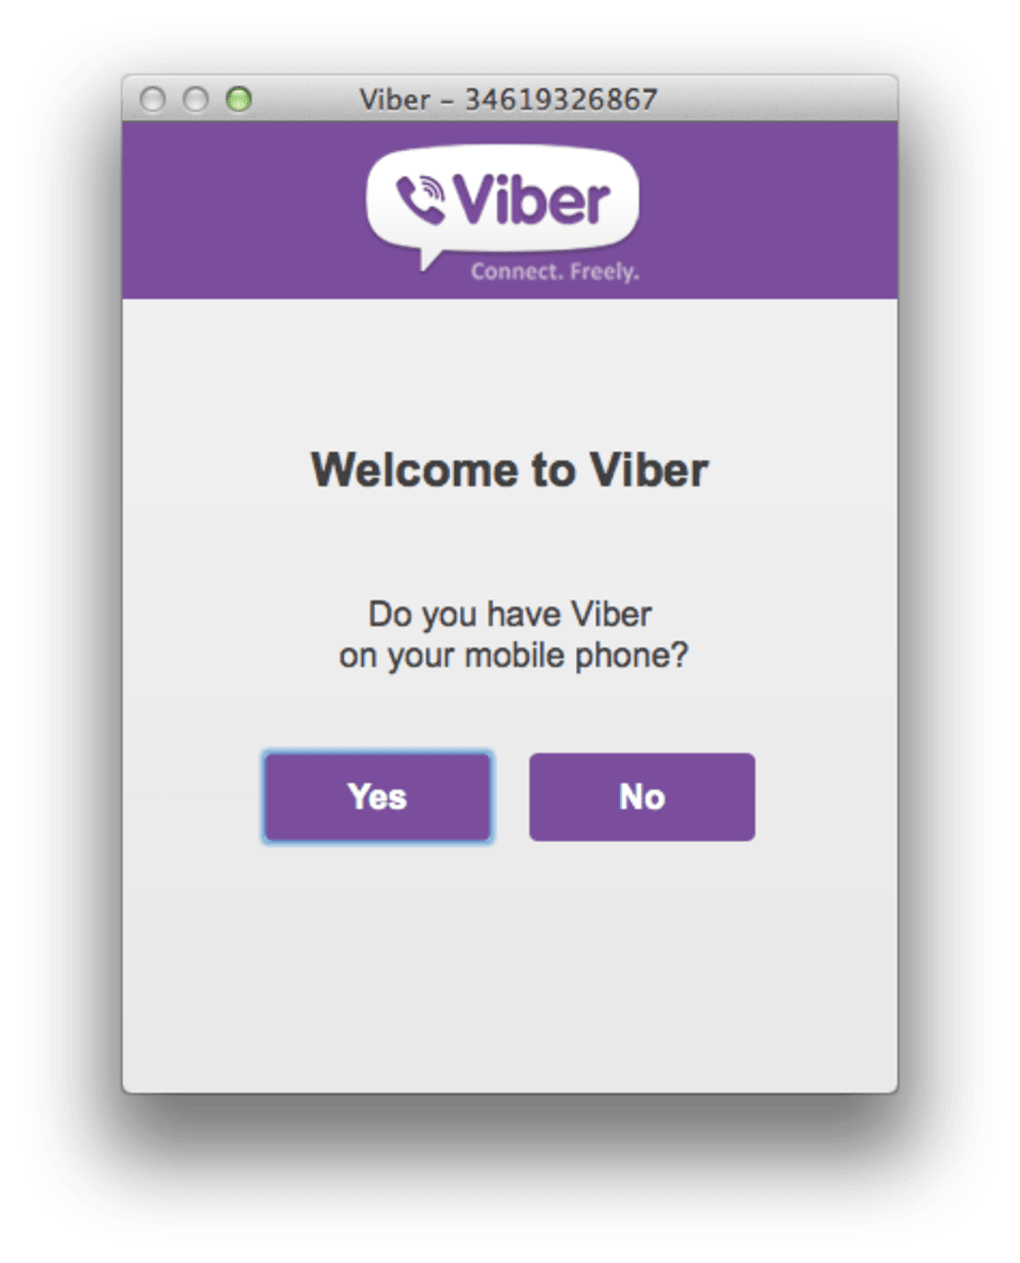 Viber Free Call Download For Mac